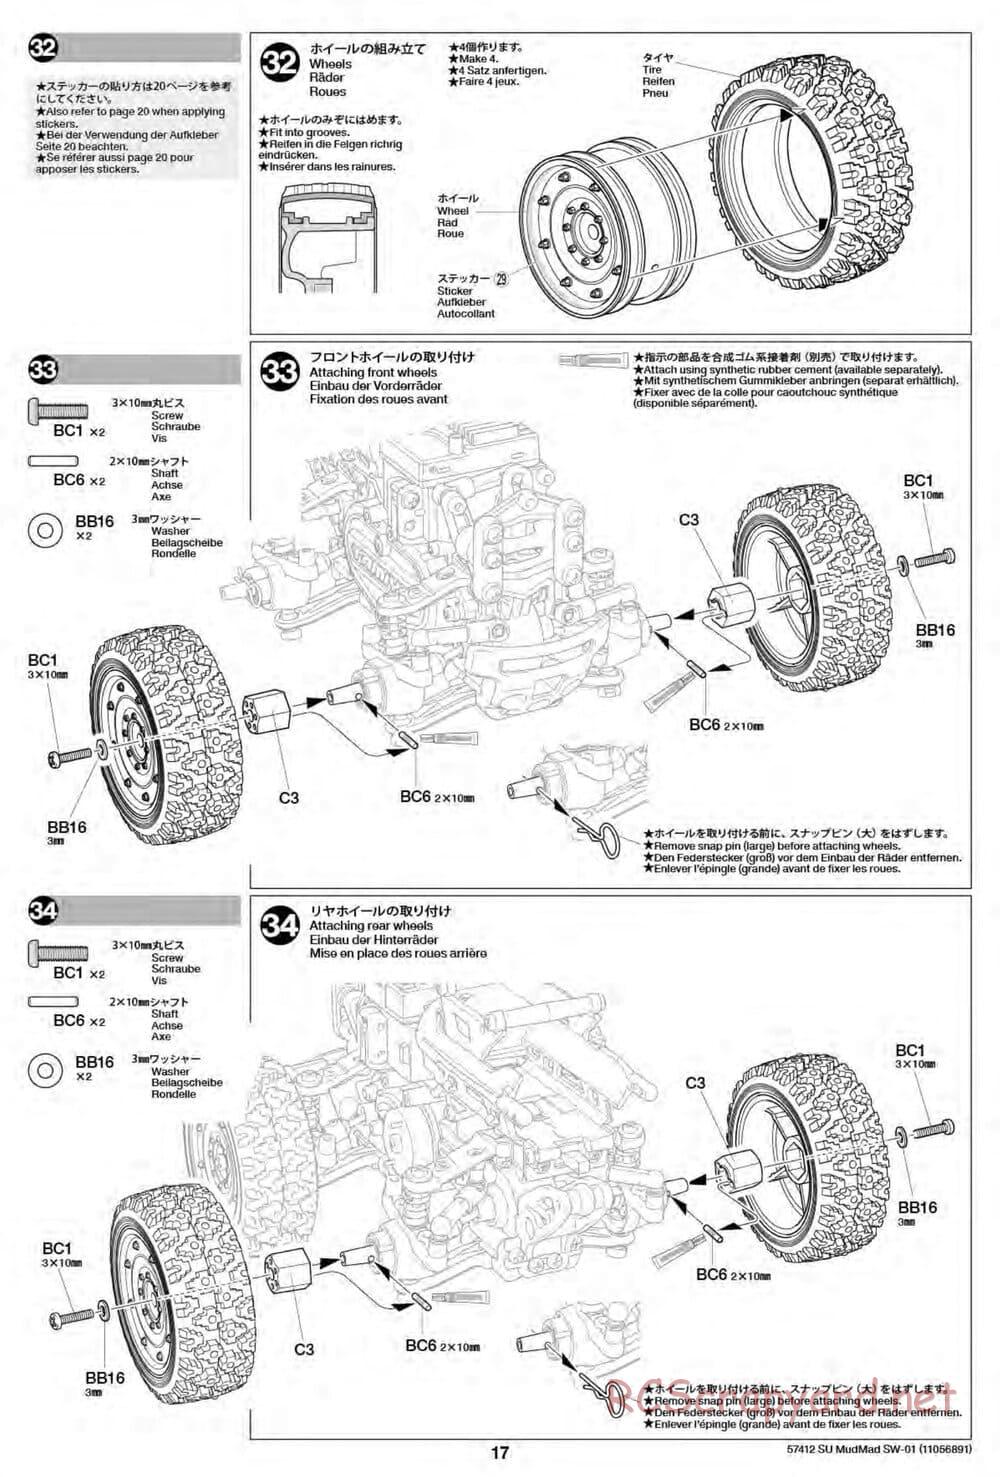 Tamiya - MudMad - SW-01 Chassis - Manual - Page 17